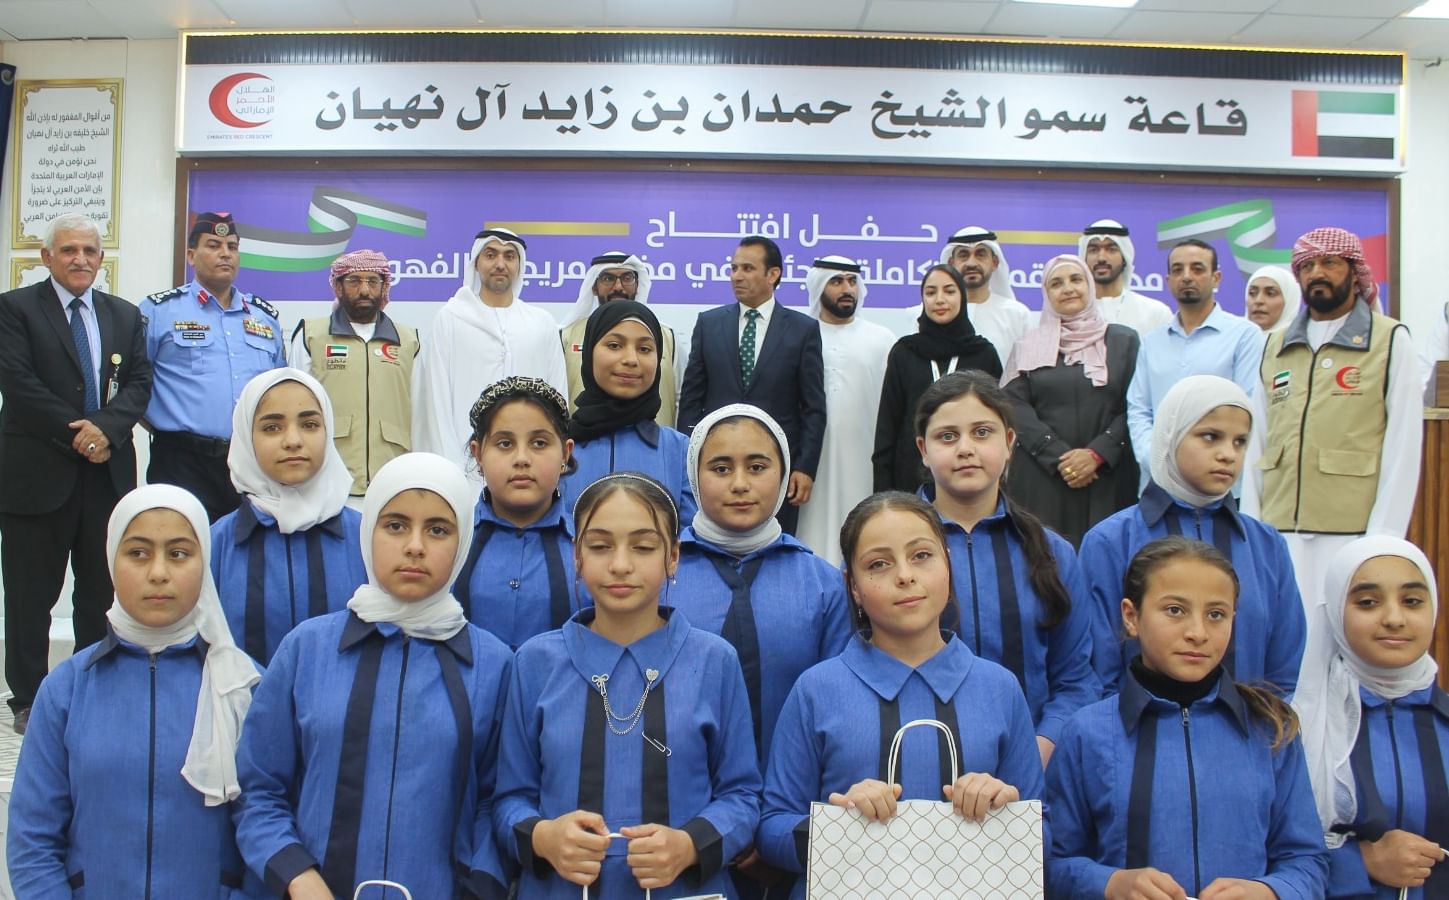 Full-fledged digital school launched at Emirati-Jordanian Refugee Camp in Mrajeeb Al Fhood